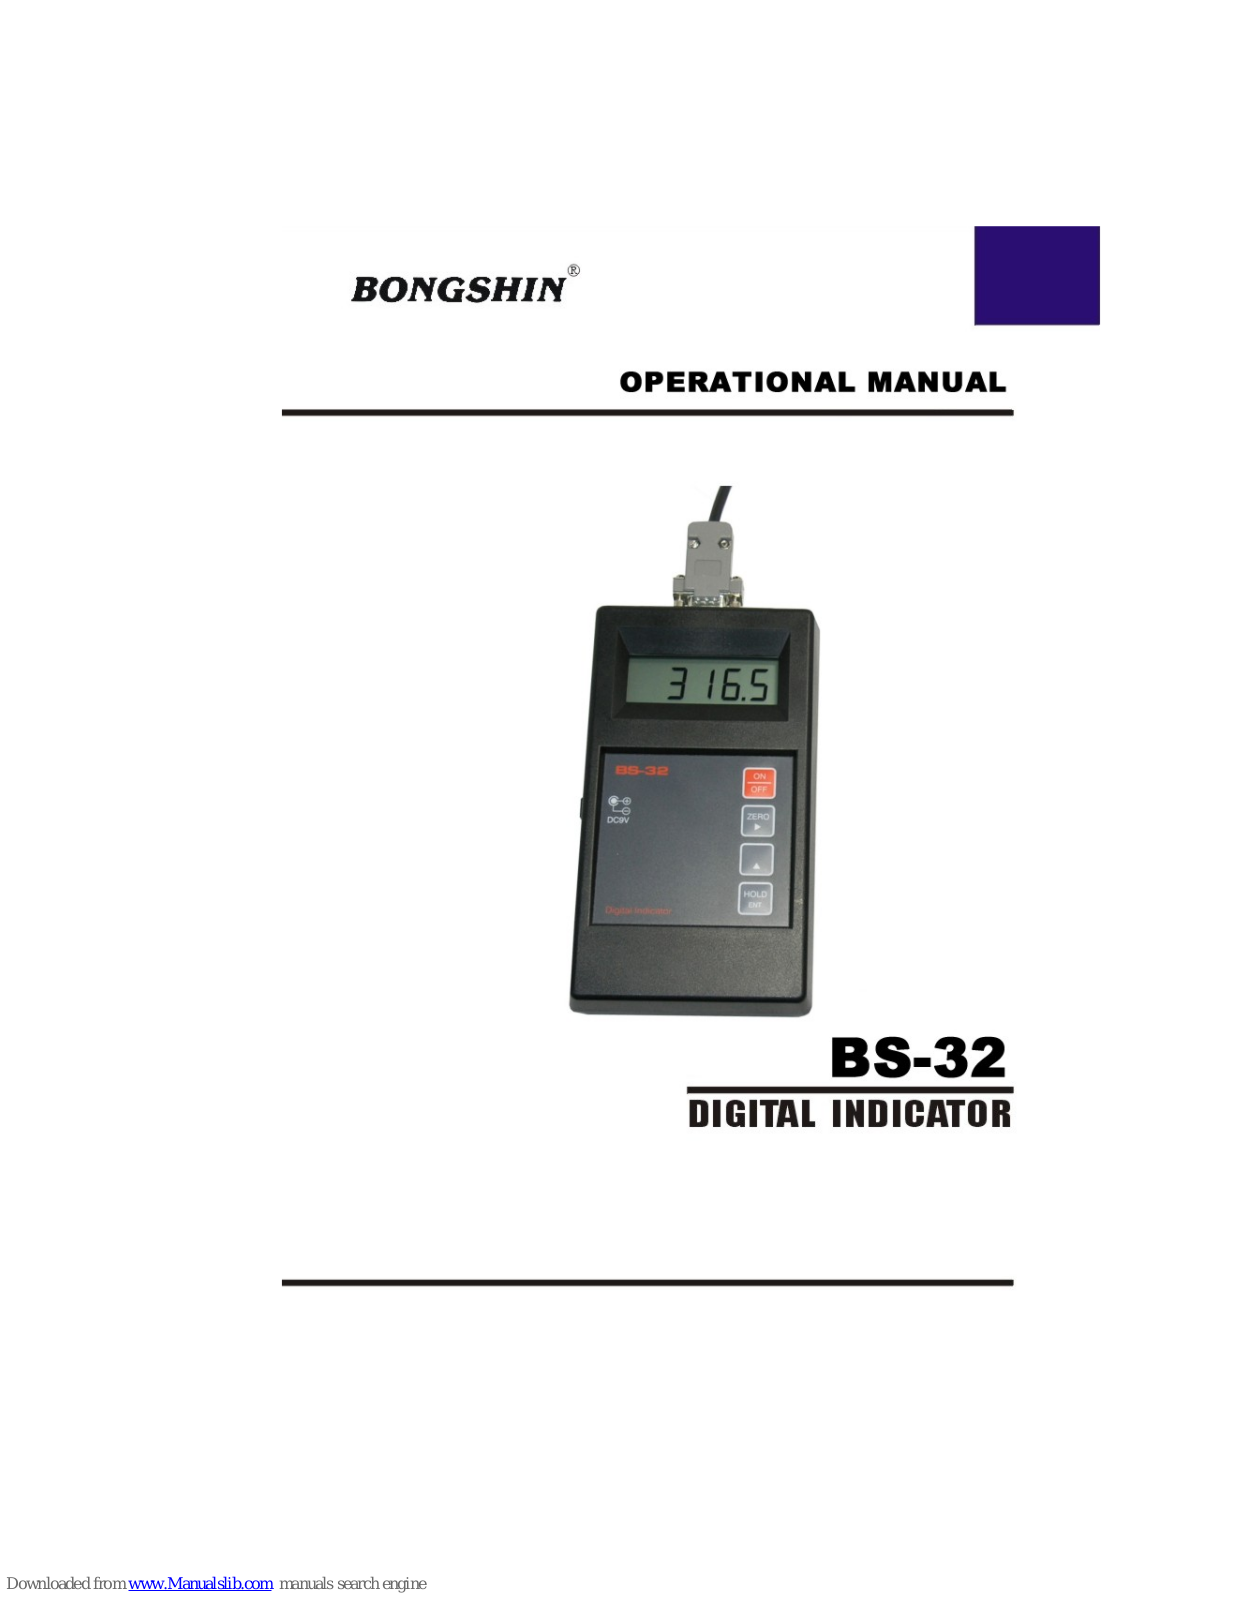 Bongshin BS-32 Operational Manual